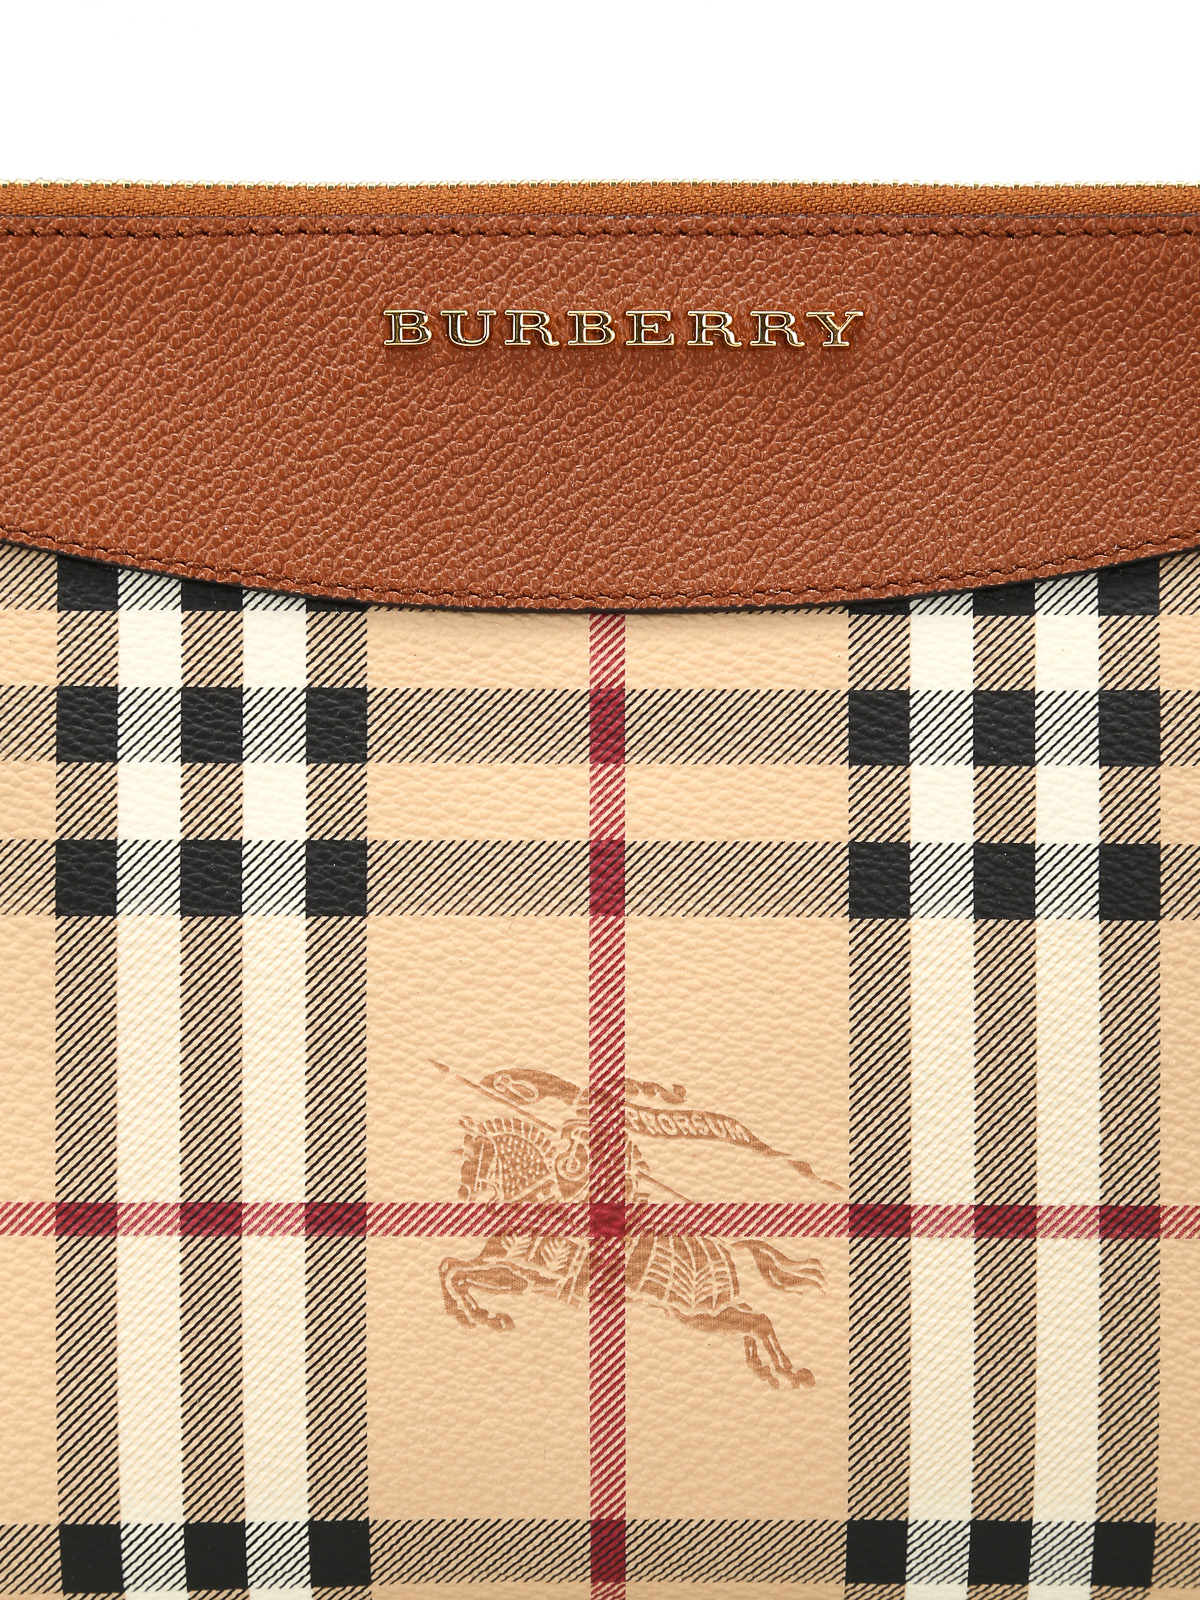 burberry france shop online